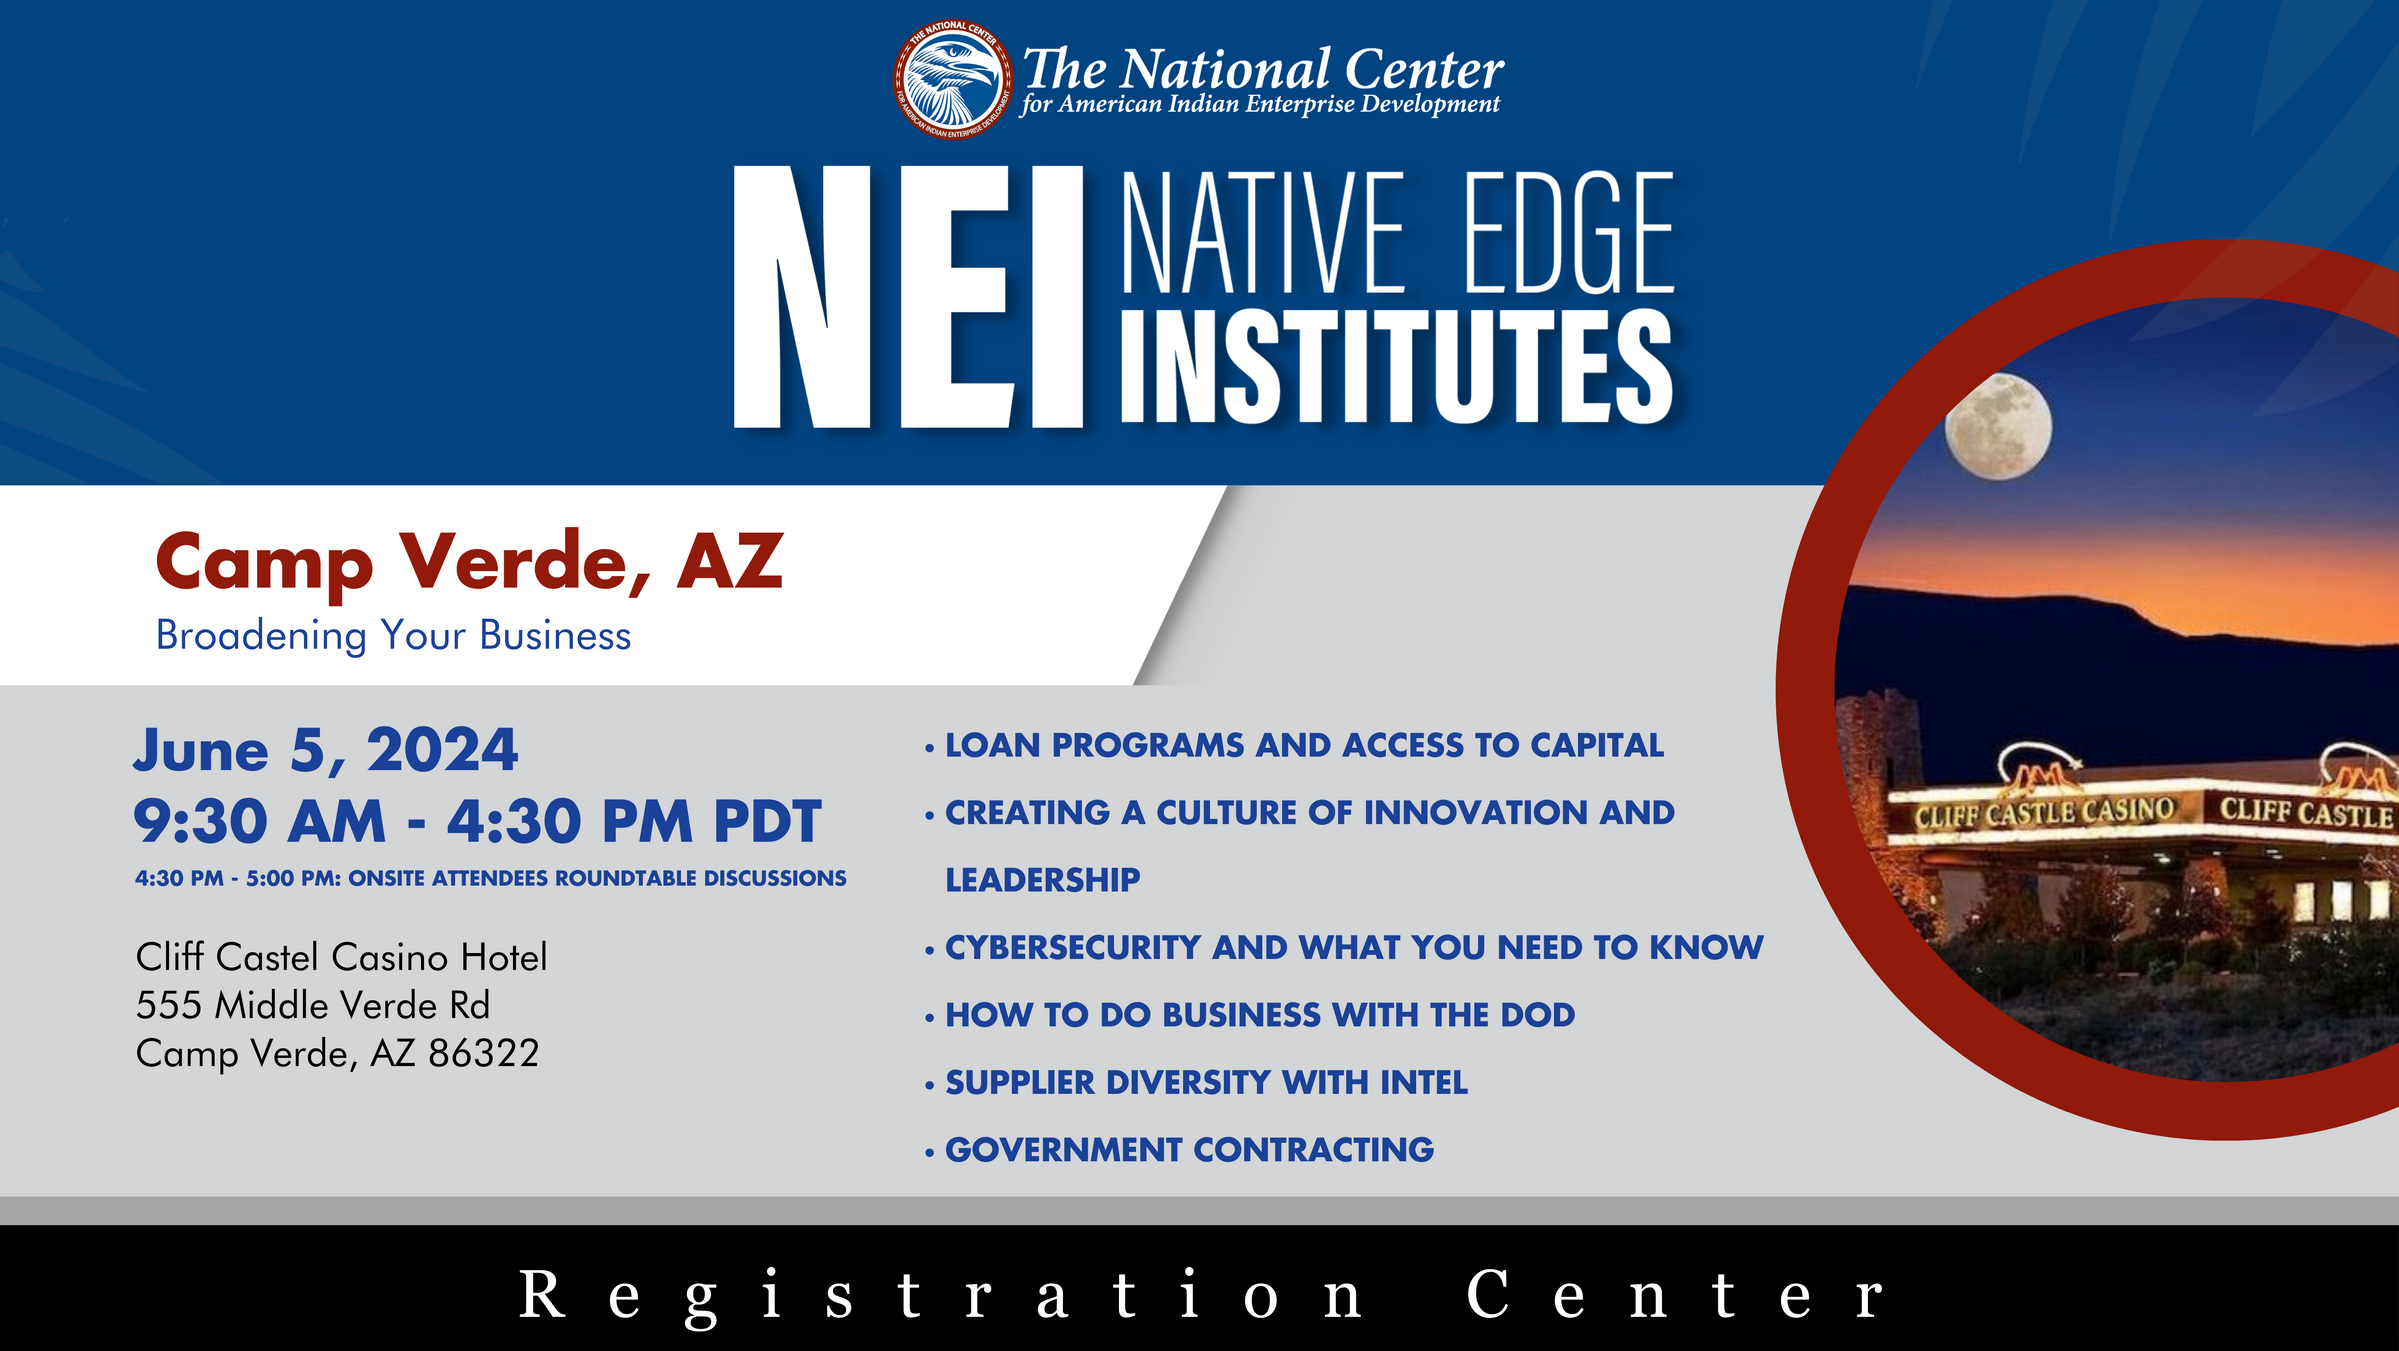 Native Edge Institute-Camp Verde, AZ